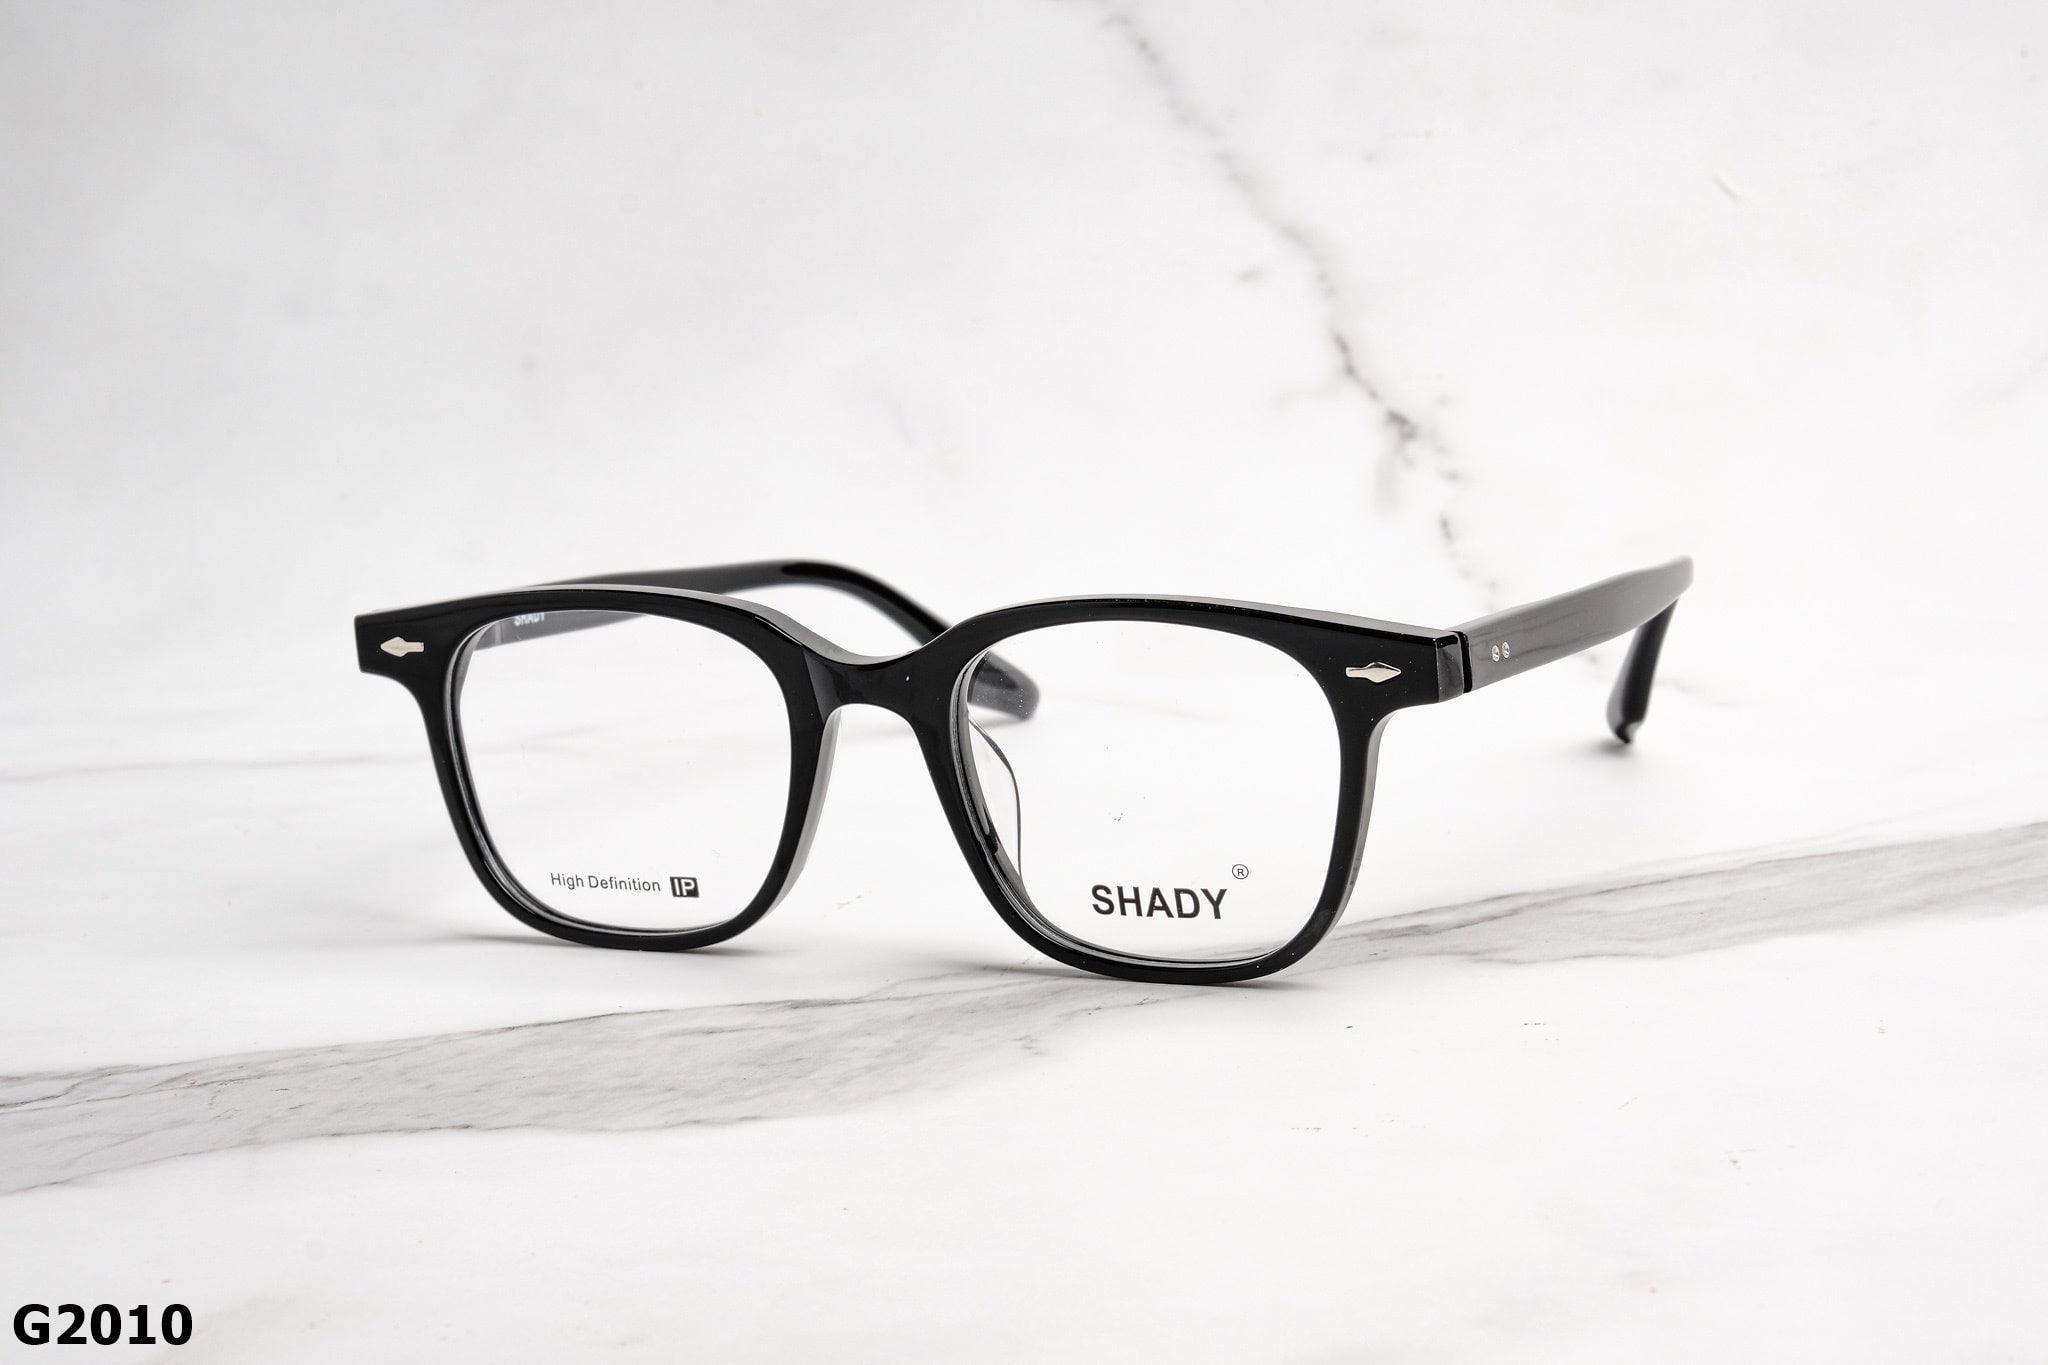  SHADY Eyewear - Glasses - G2010 